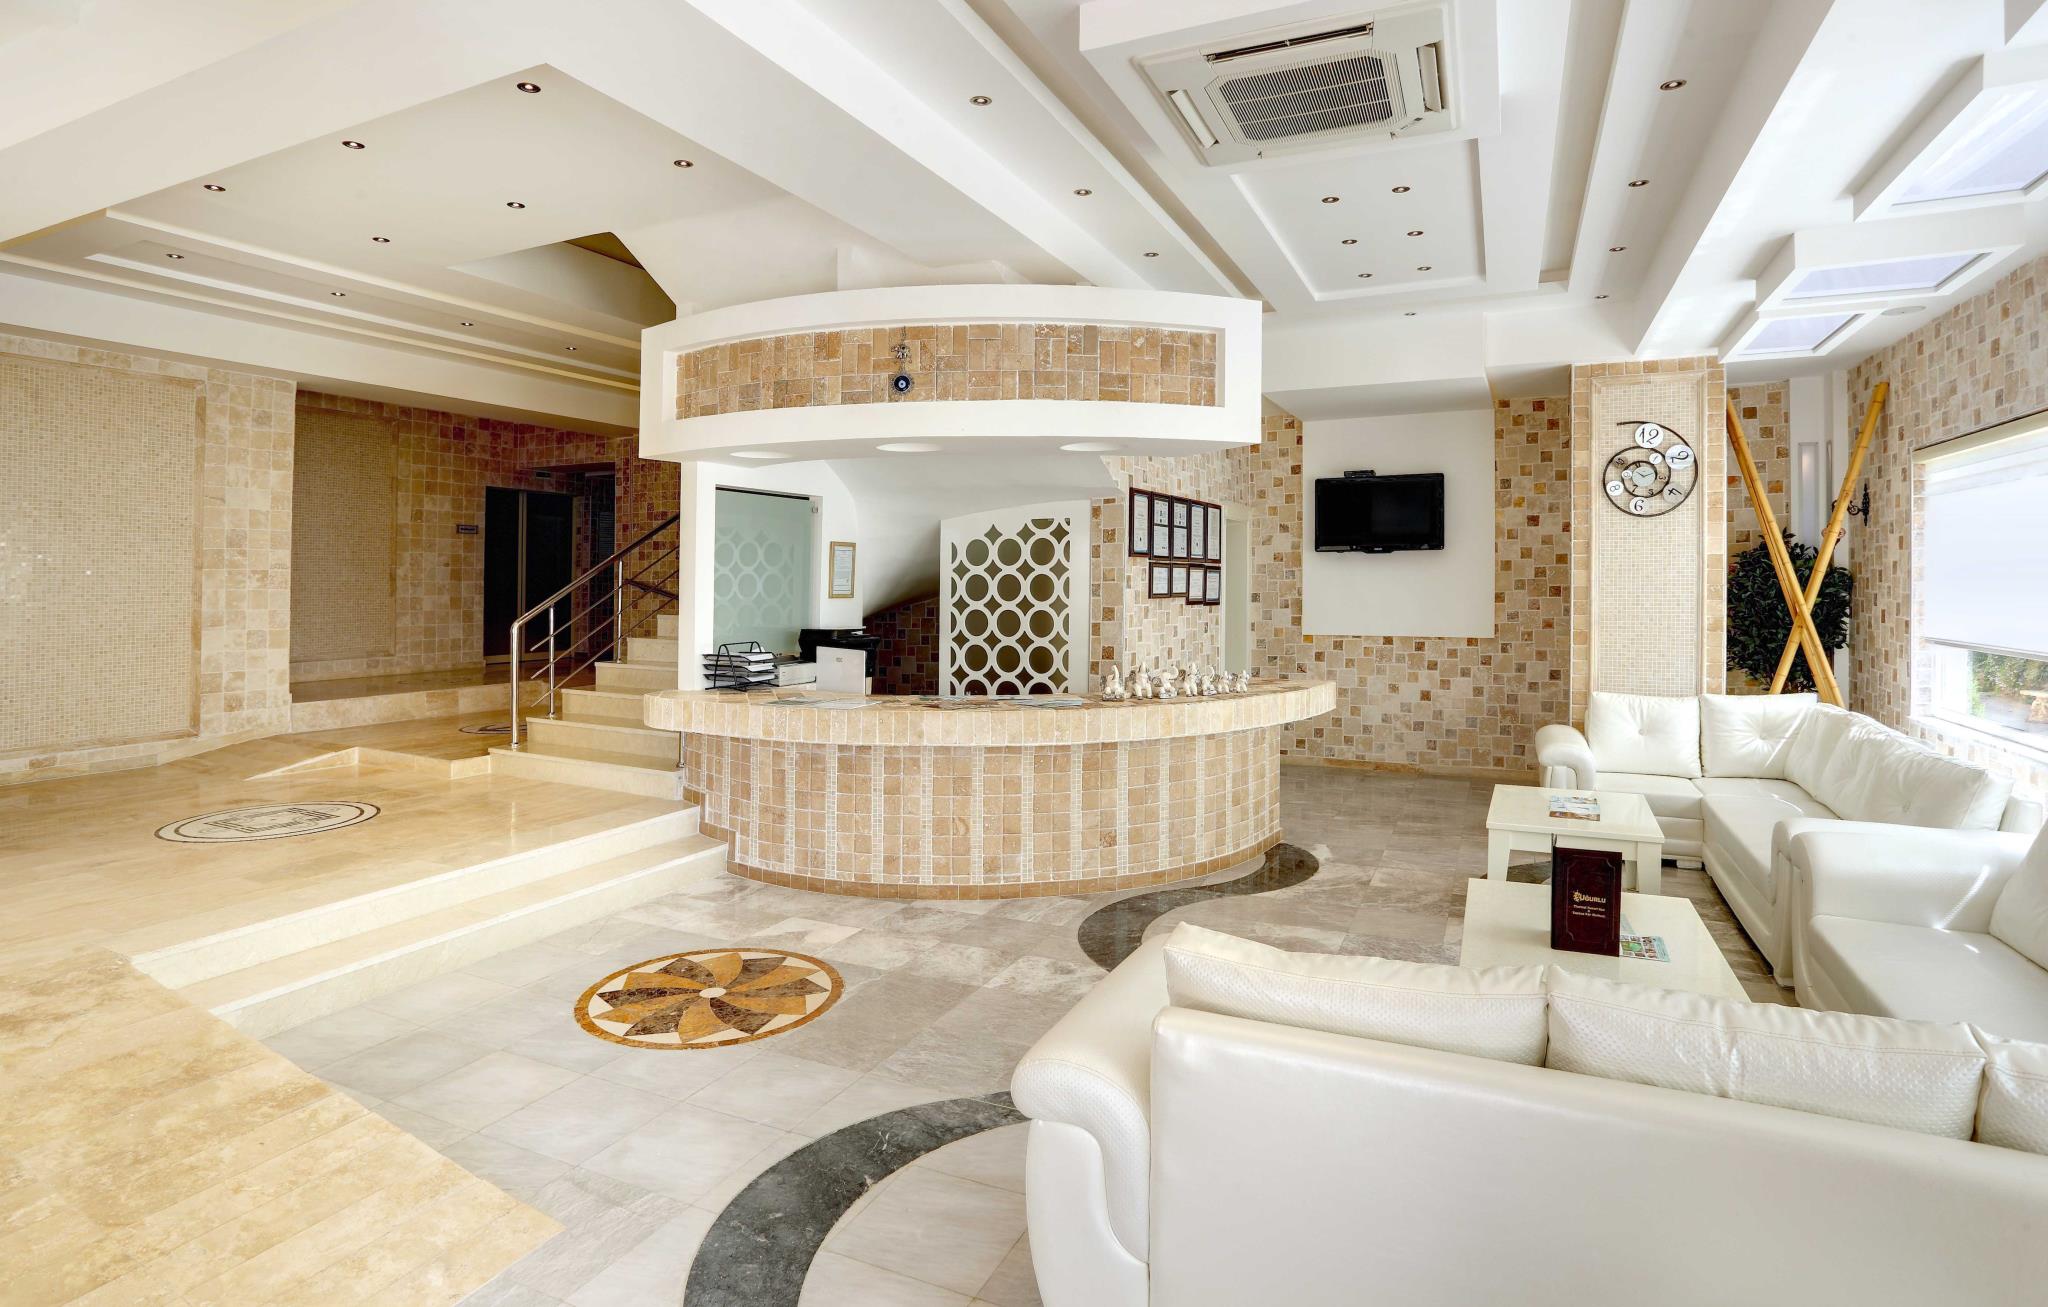 Uğurlu Termal Resort&Spa ve Kür Merkezi (Ugurlu Termal Resort Spa & Spa Cure Center)